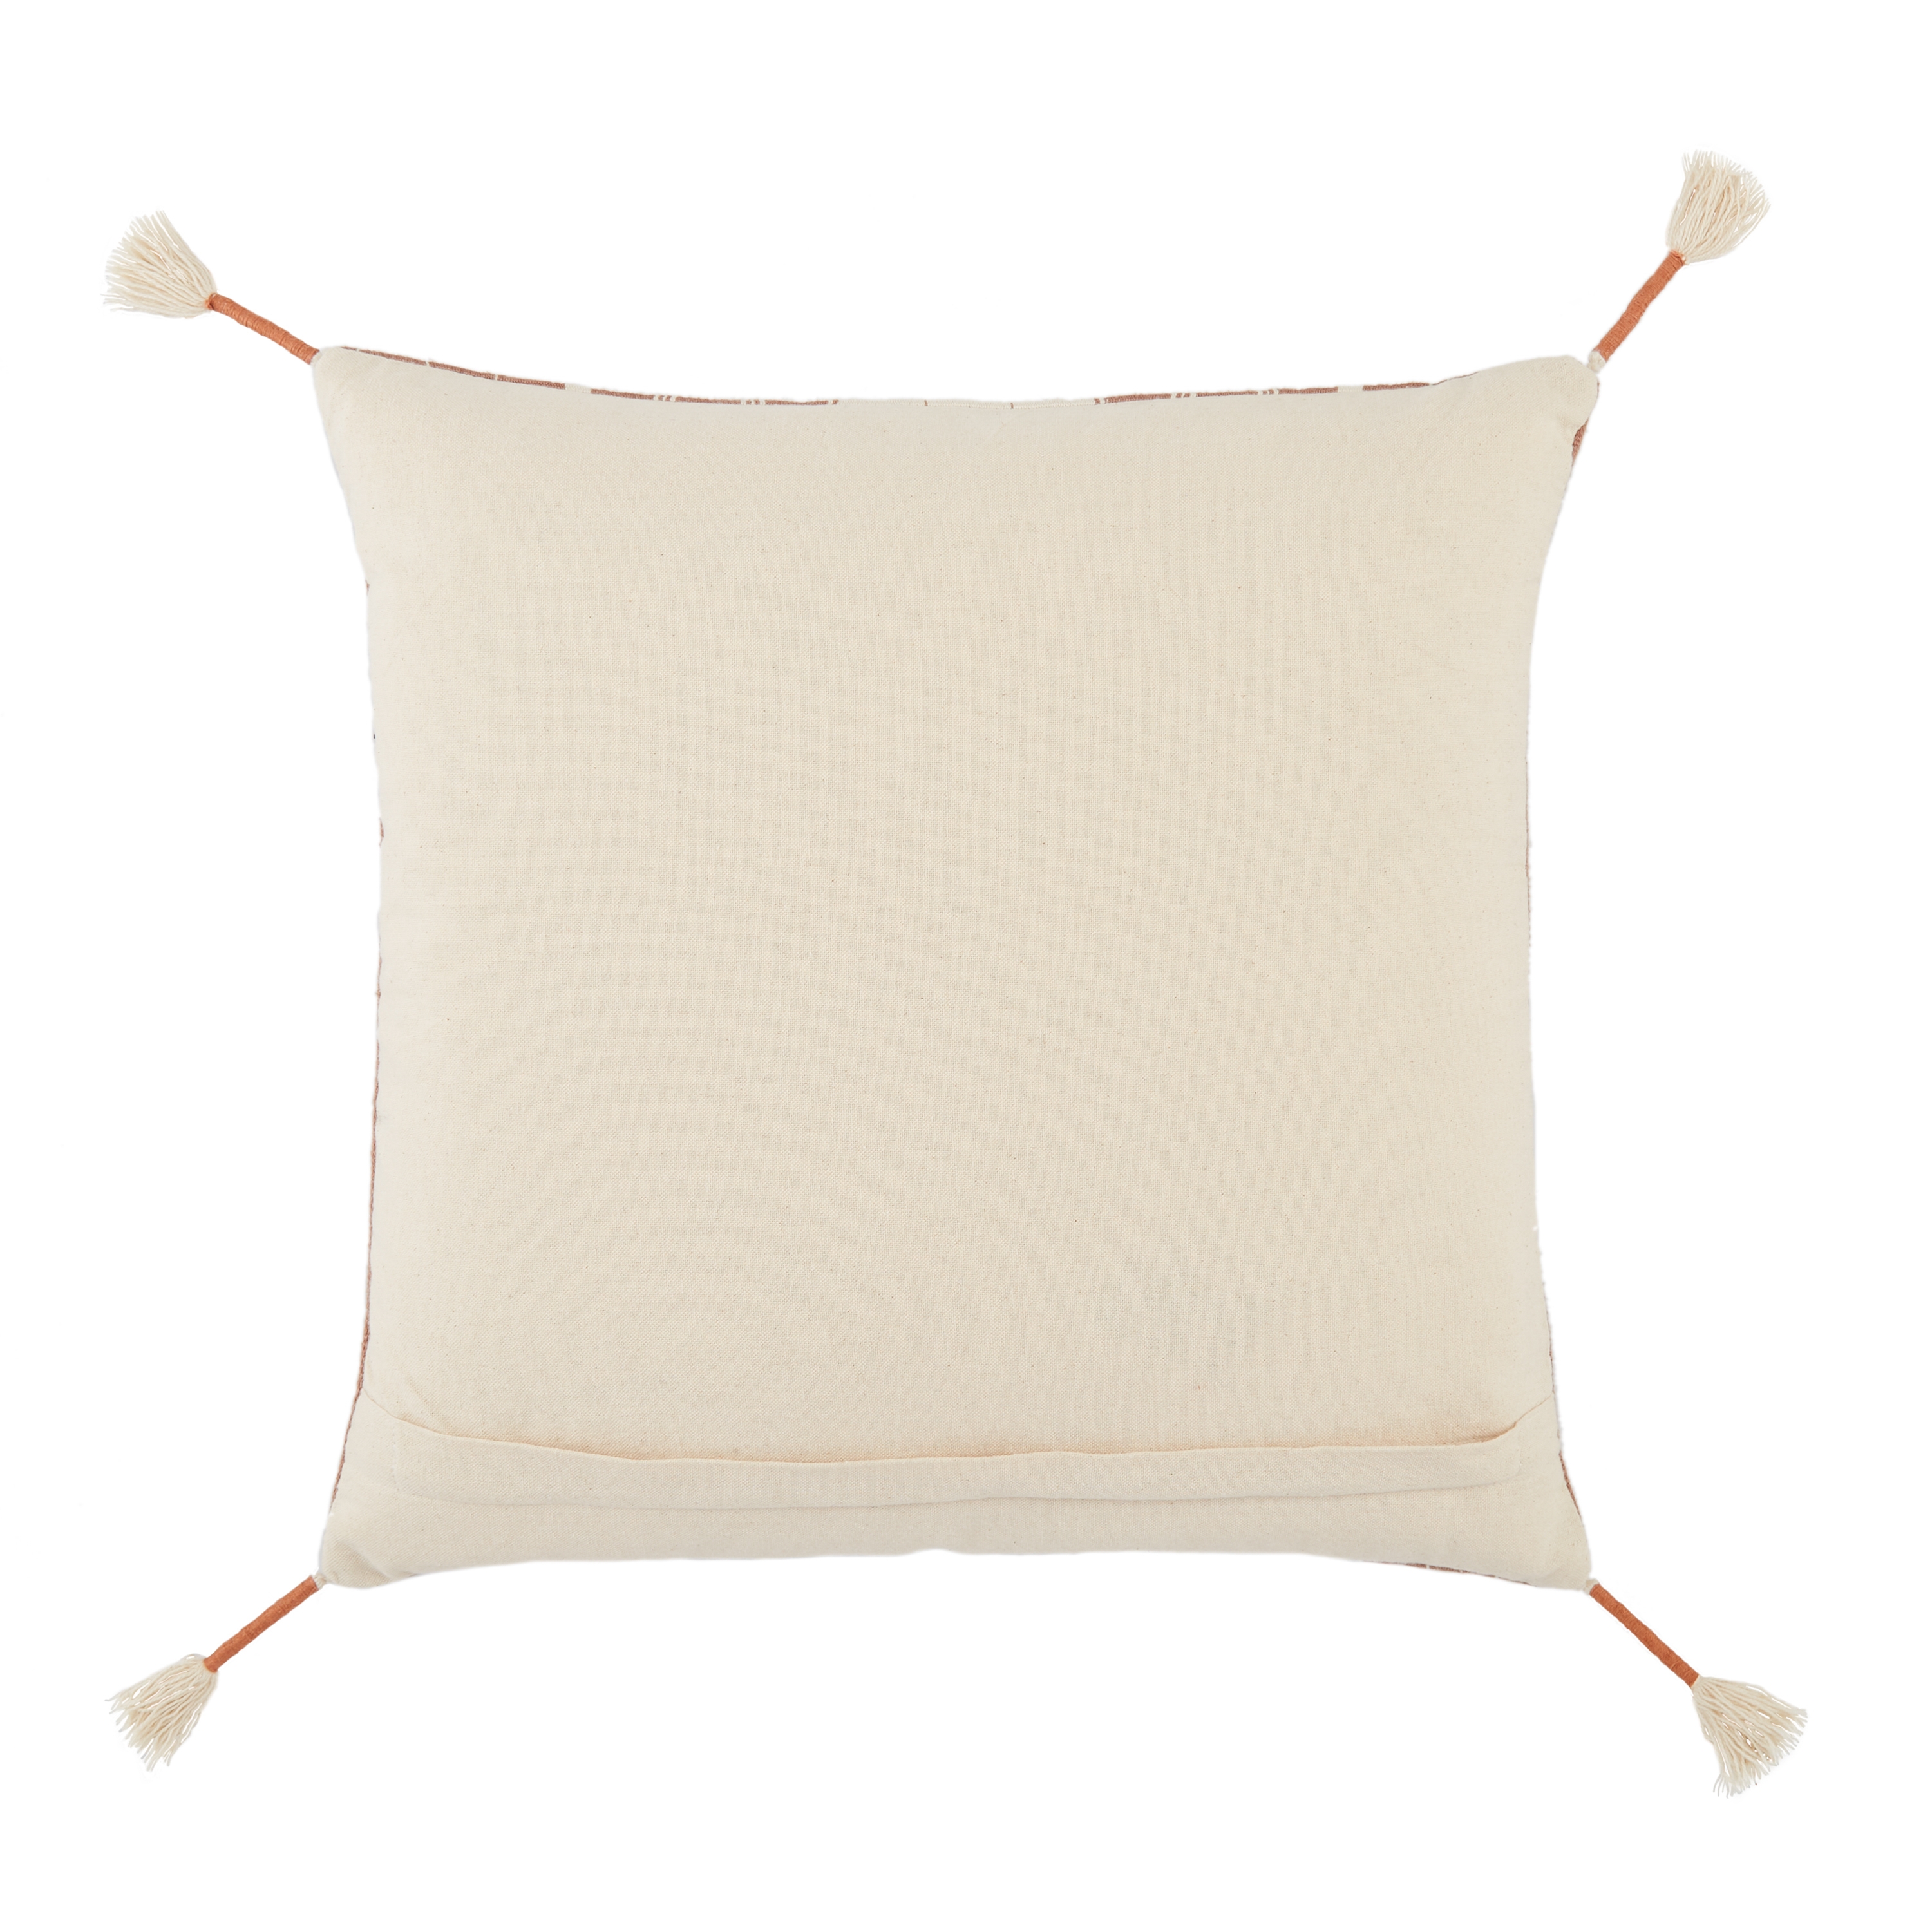 Lipila Pillow, Mauve, 18" x 18" - Image 1